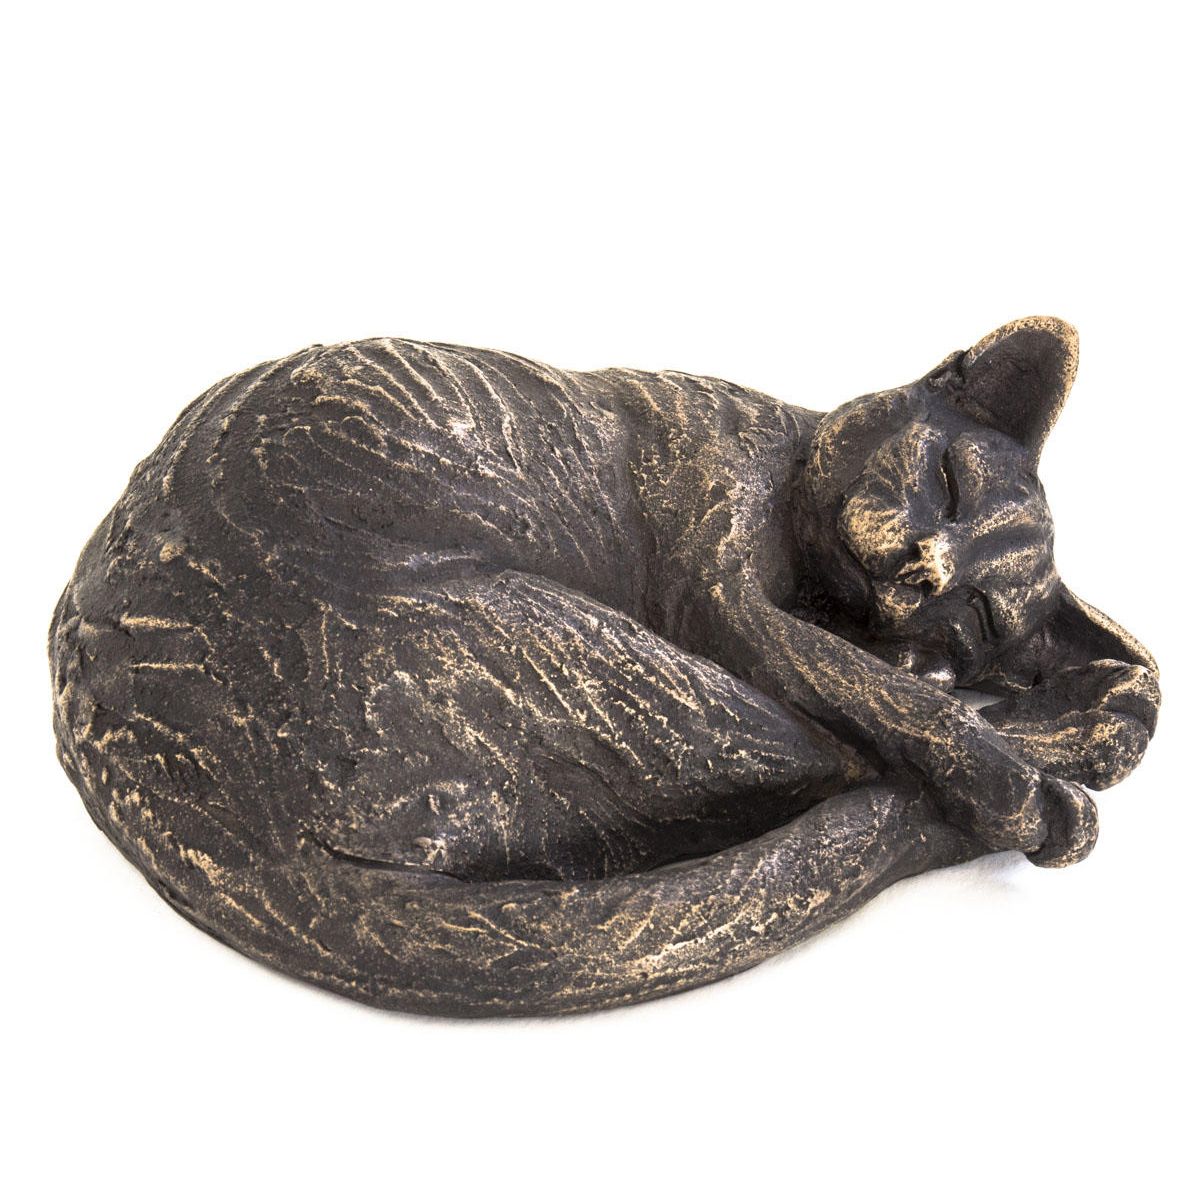 Curled Maxi Cat by Suzie Marsh